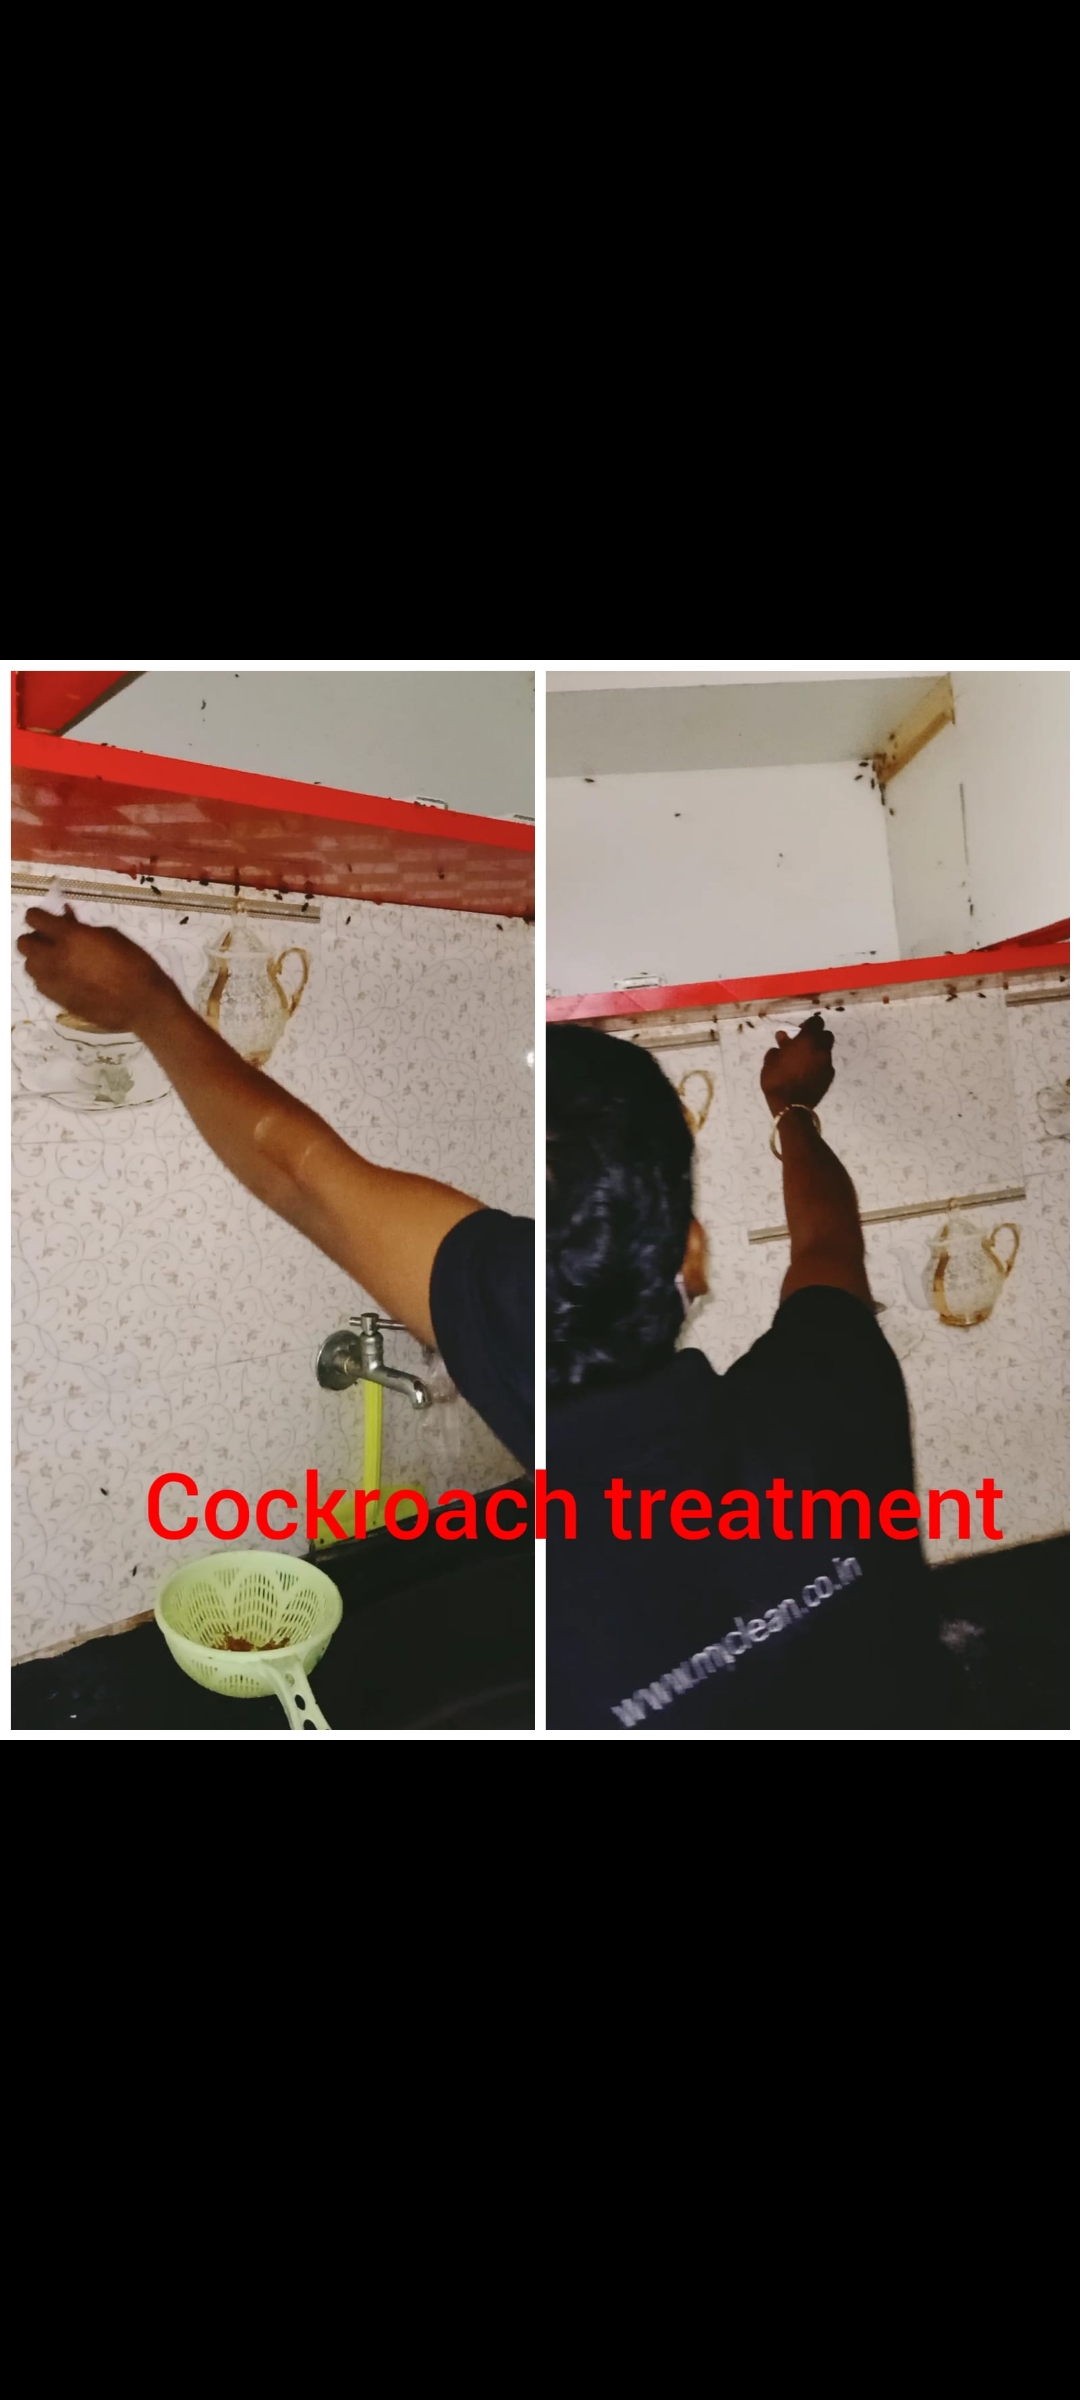 Cockroach treatment